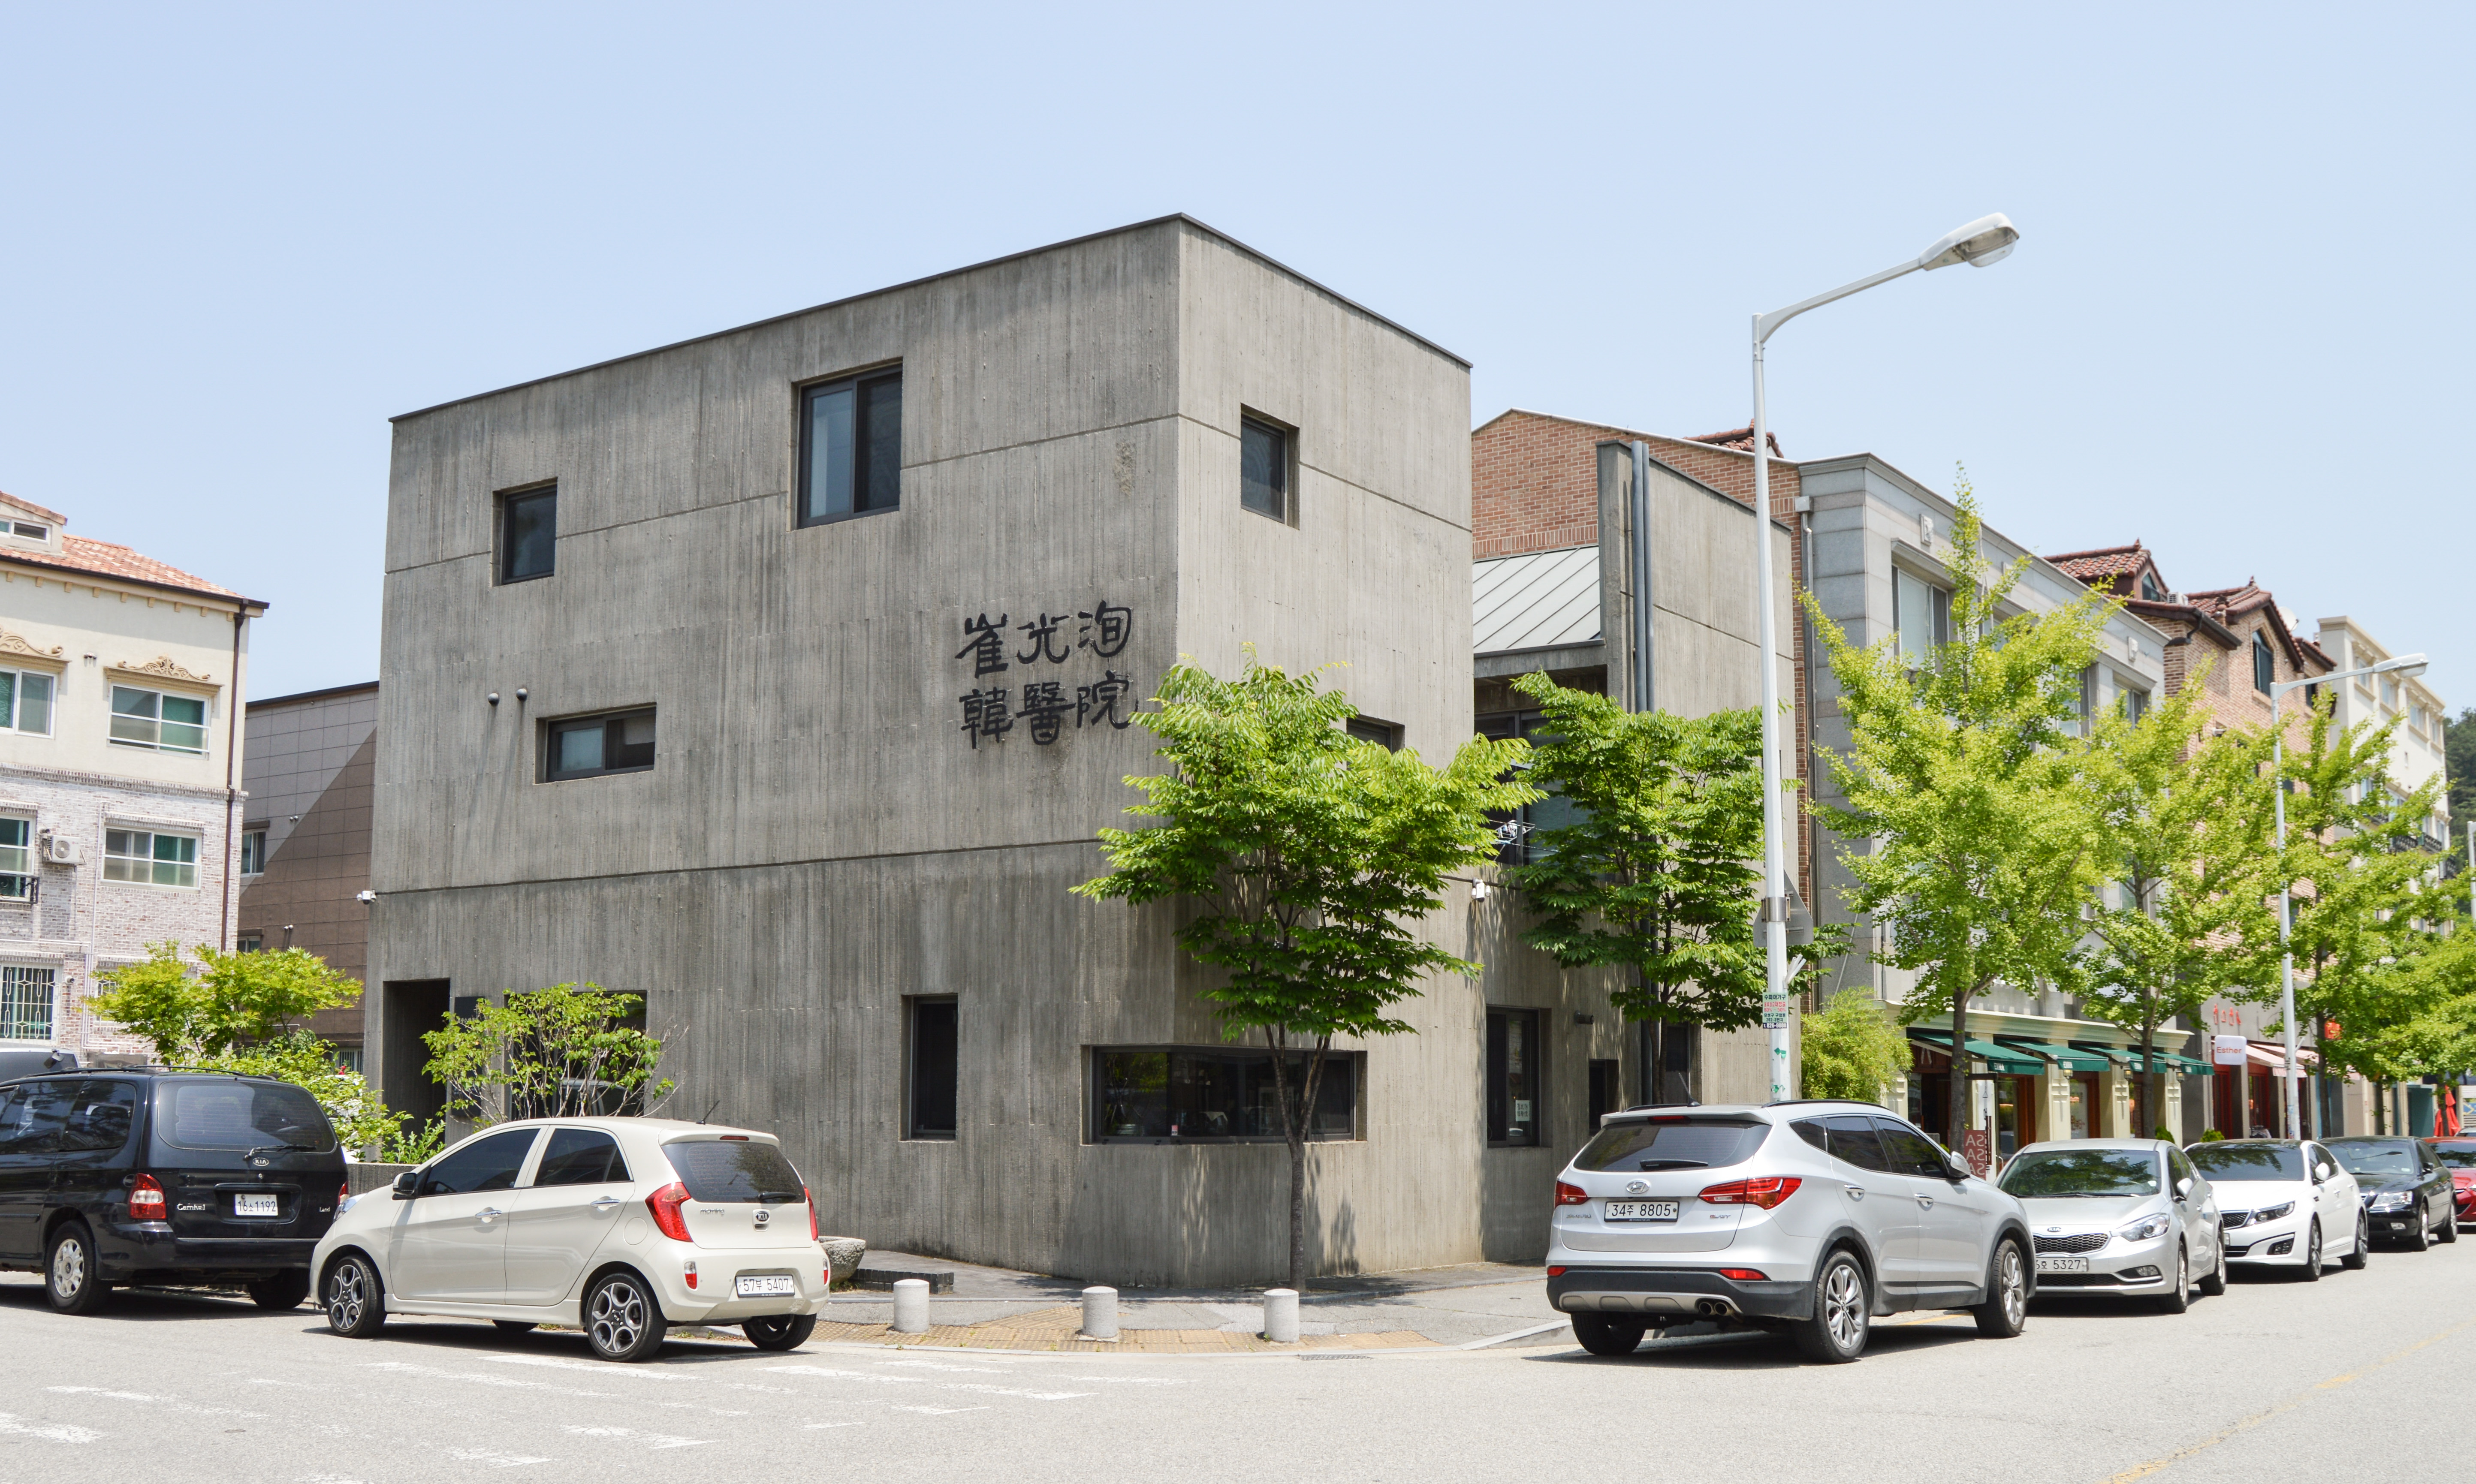 Daejeon Oriental Medicine Clinic & Residence / Chung Hyuna